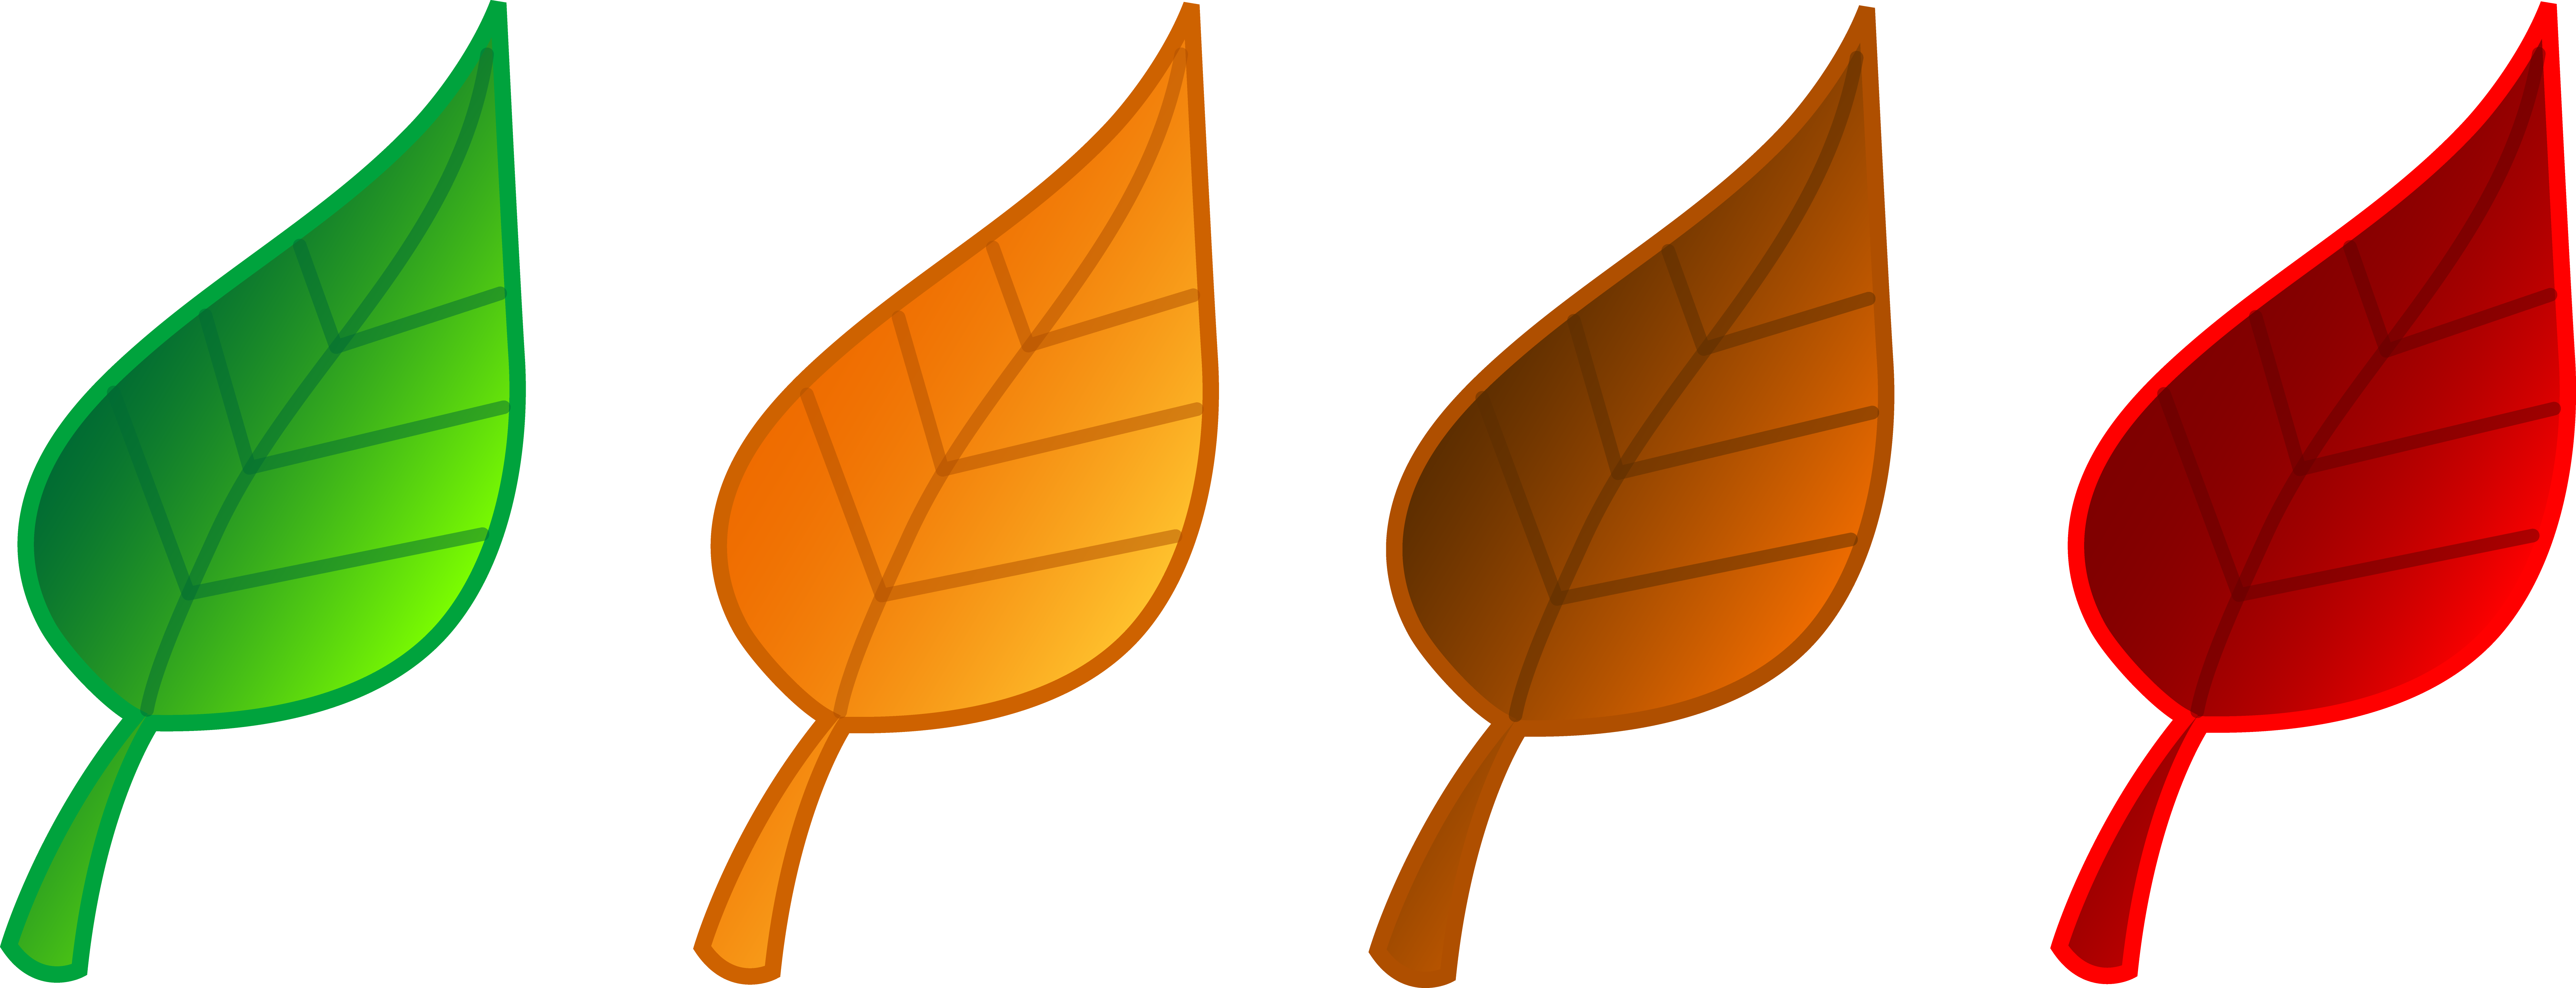 Autumn Leaves Clipart | Free Download Clip Art | Free Clip Art ...